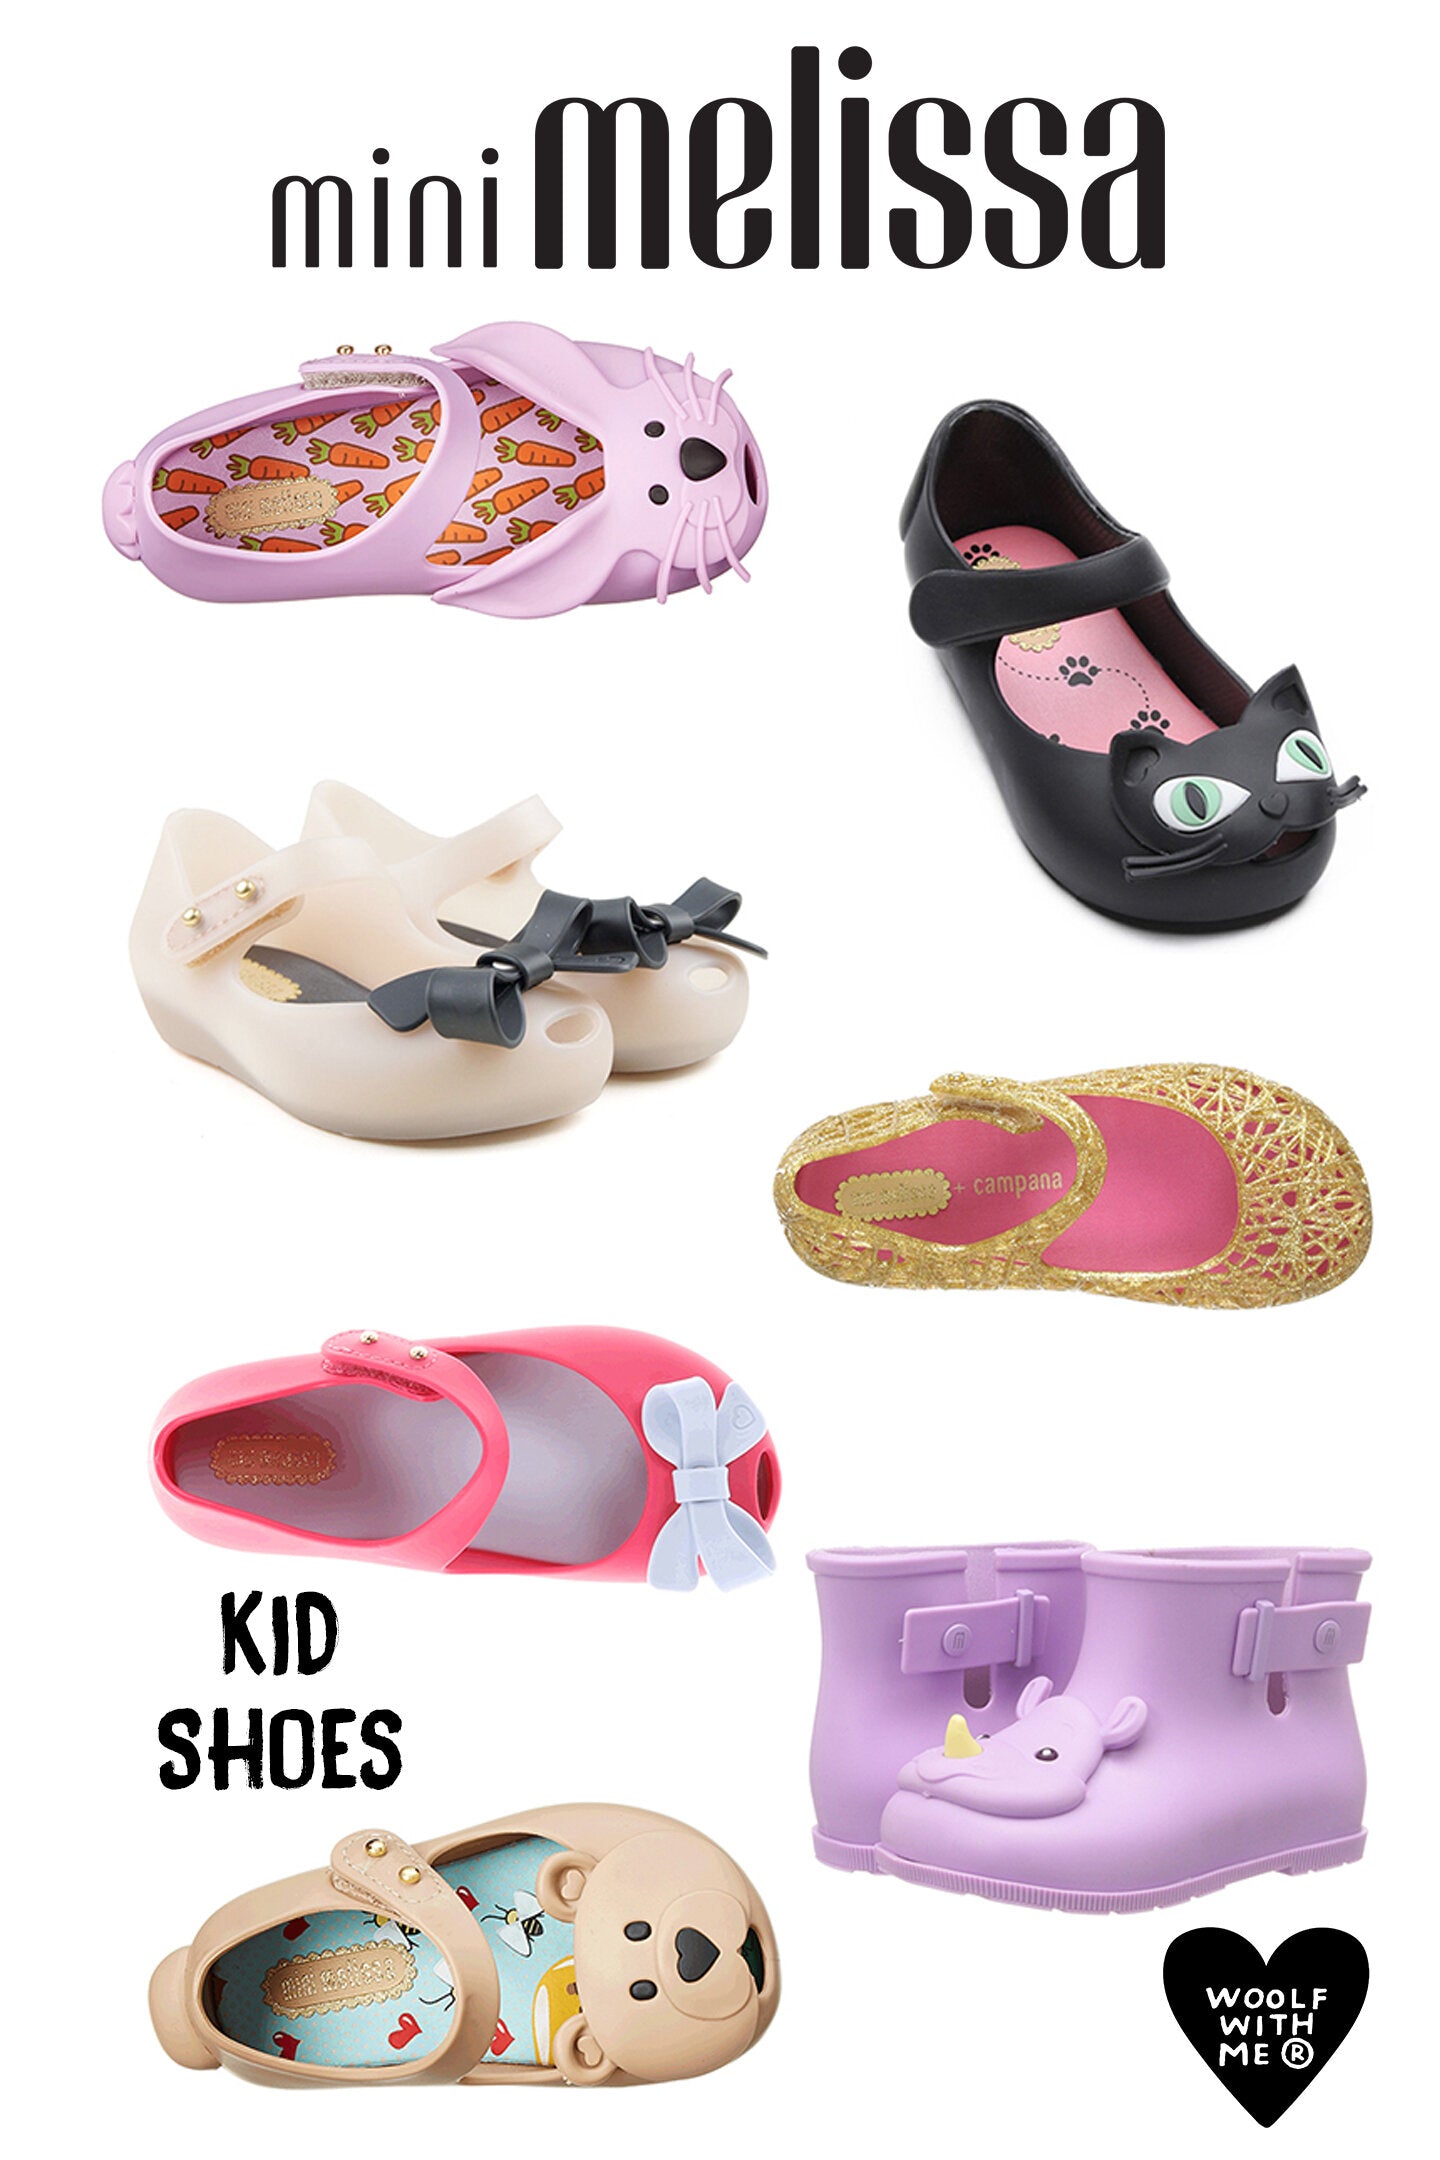 Mini Melissa: Kid Shoes for Girls.